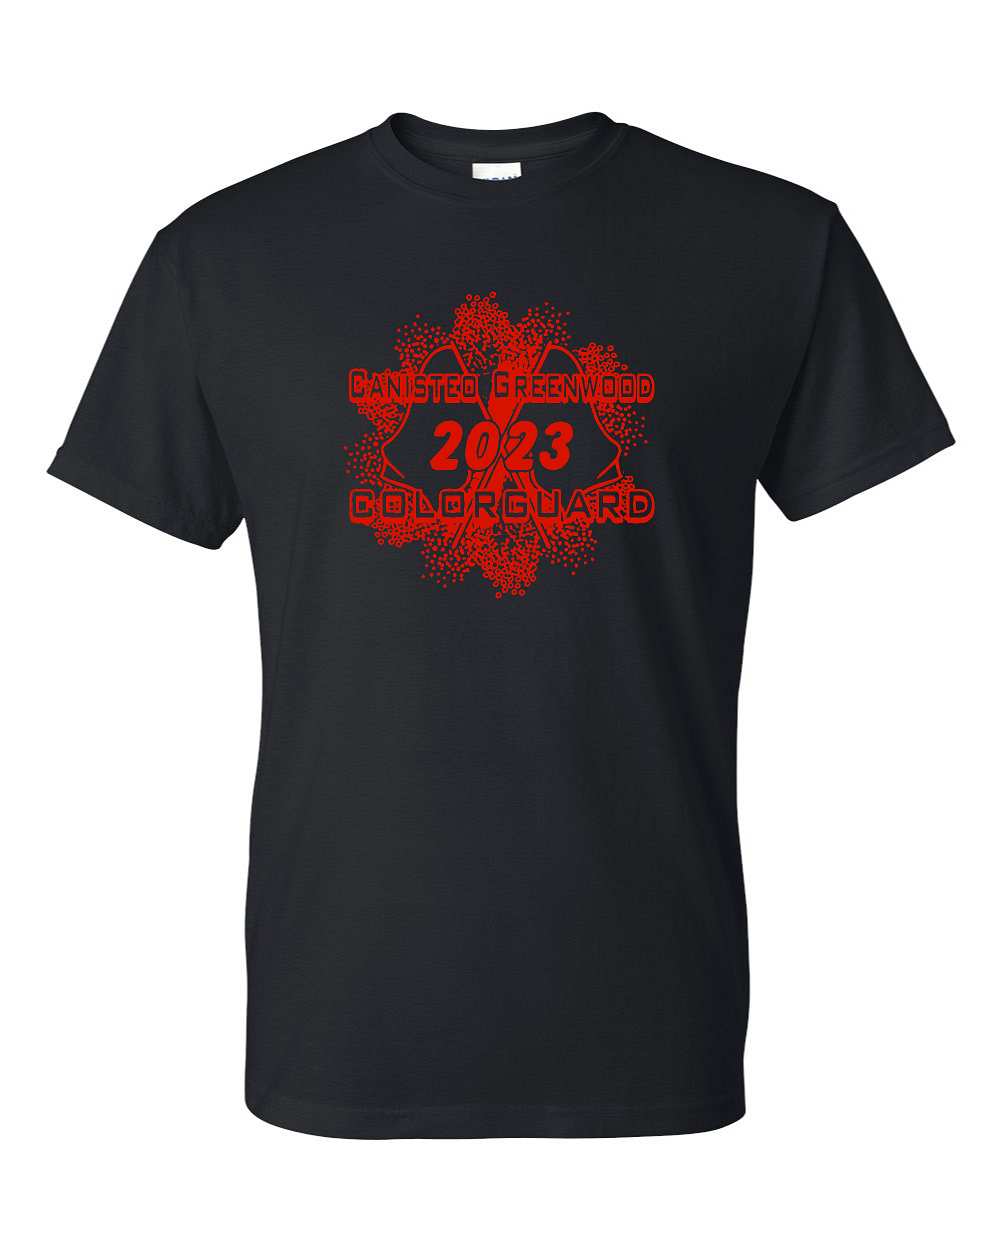 CG Color Guard GD207 Gildan® 64000 Softstyle® T-Shirt